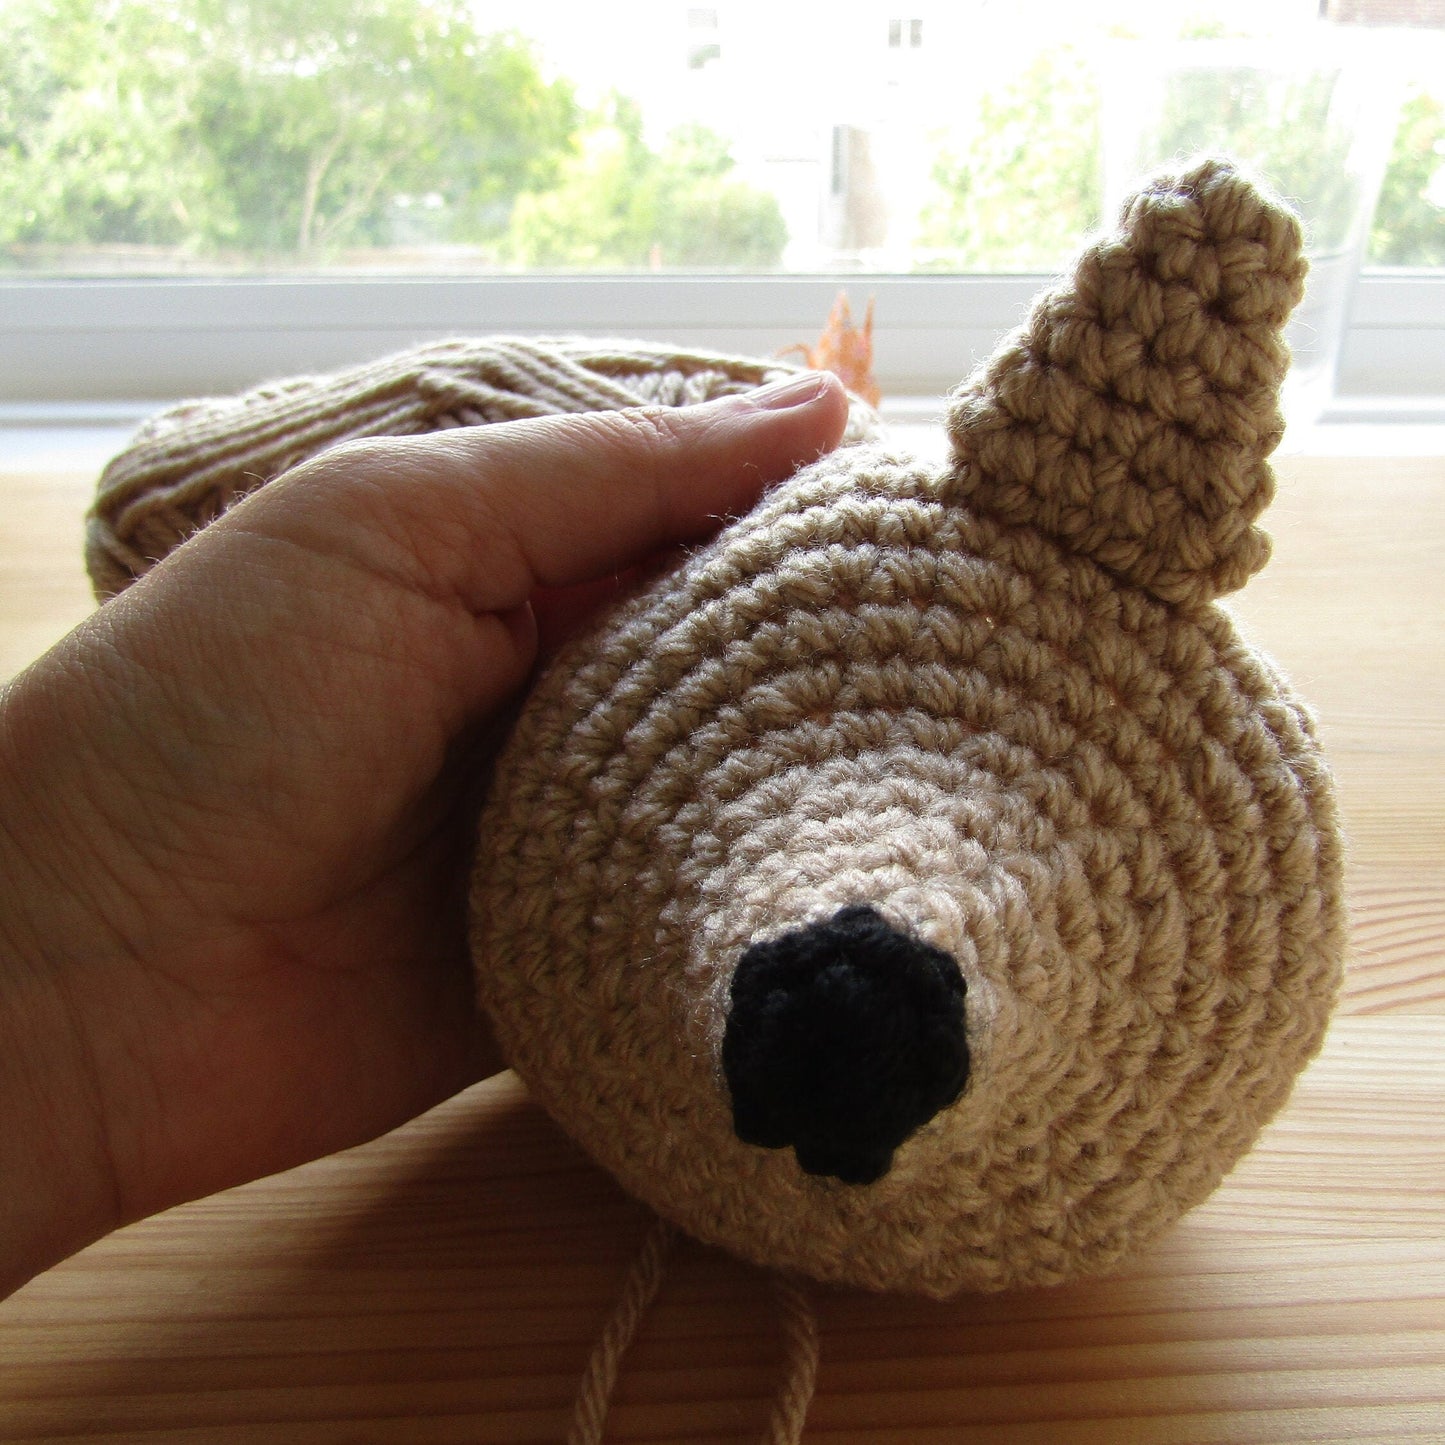 Crochet kit: Amigurumi Hedgehog